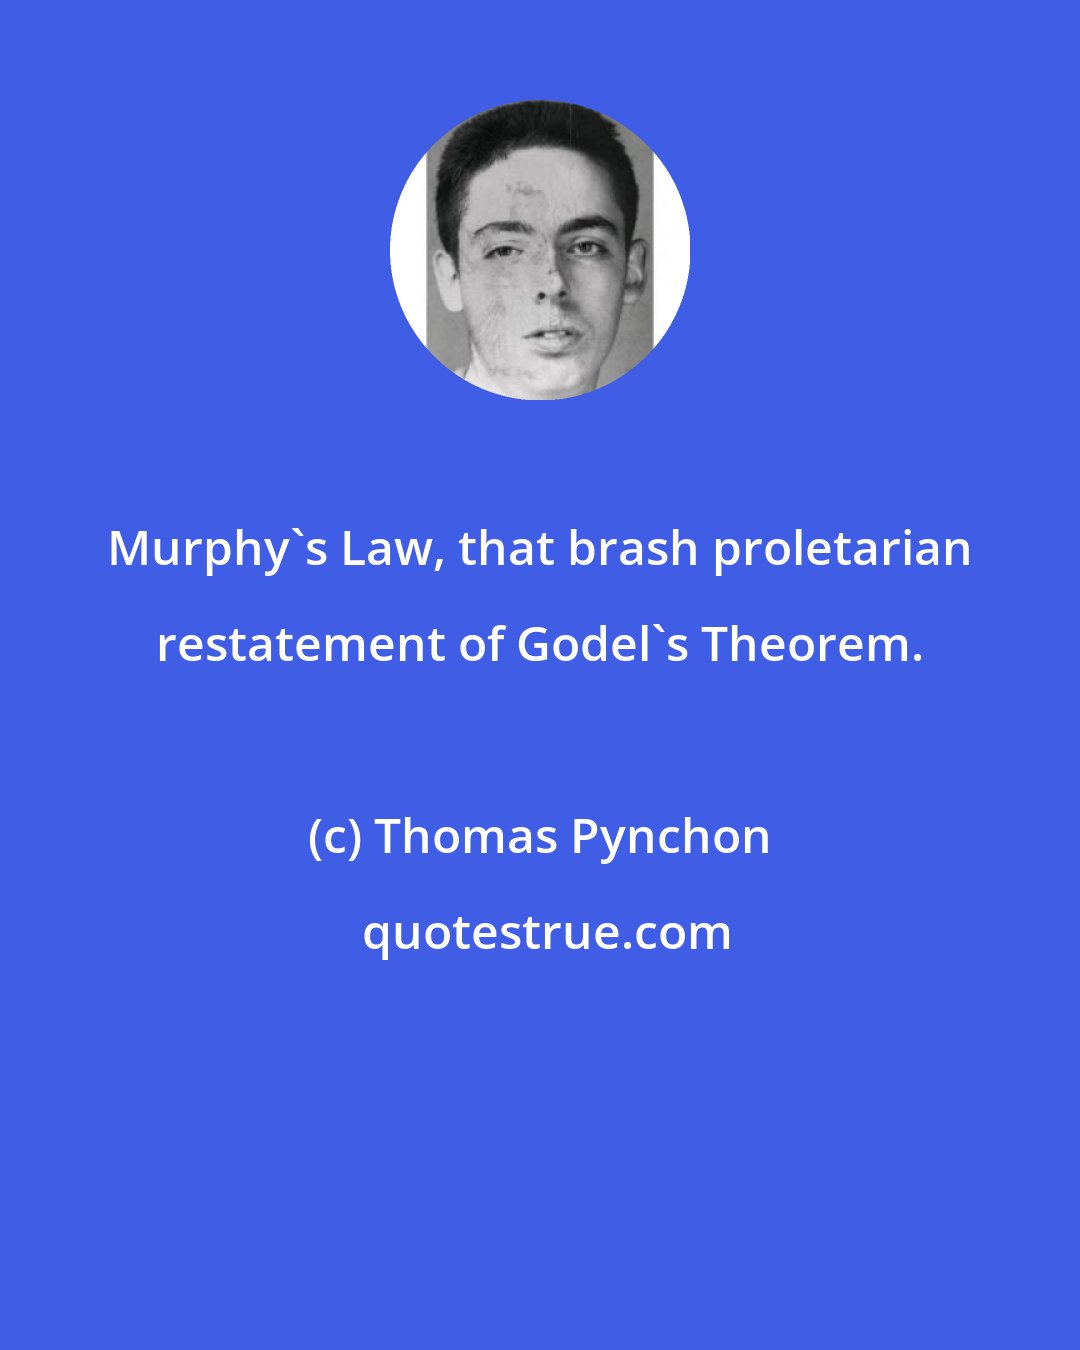 Thomas Pynchon: Murphy's Law, that brash proletarian restatement of Godel's Theorem.